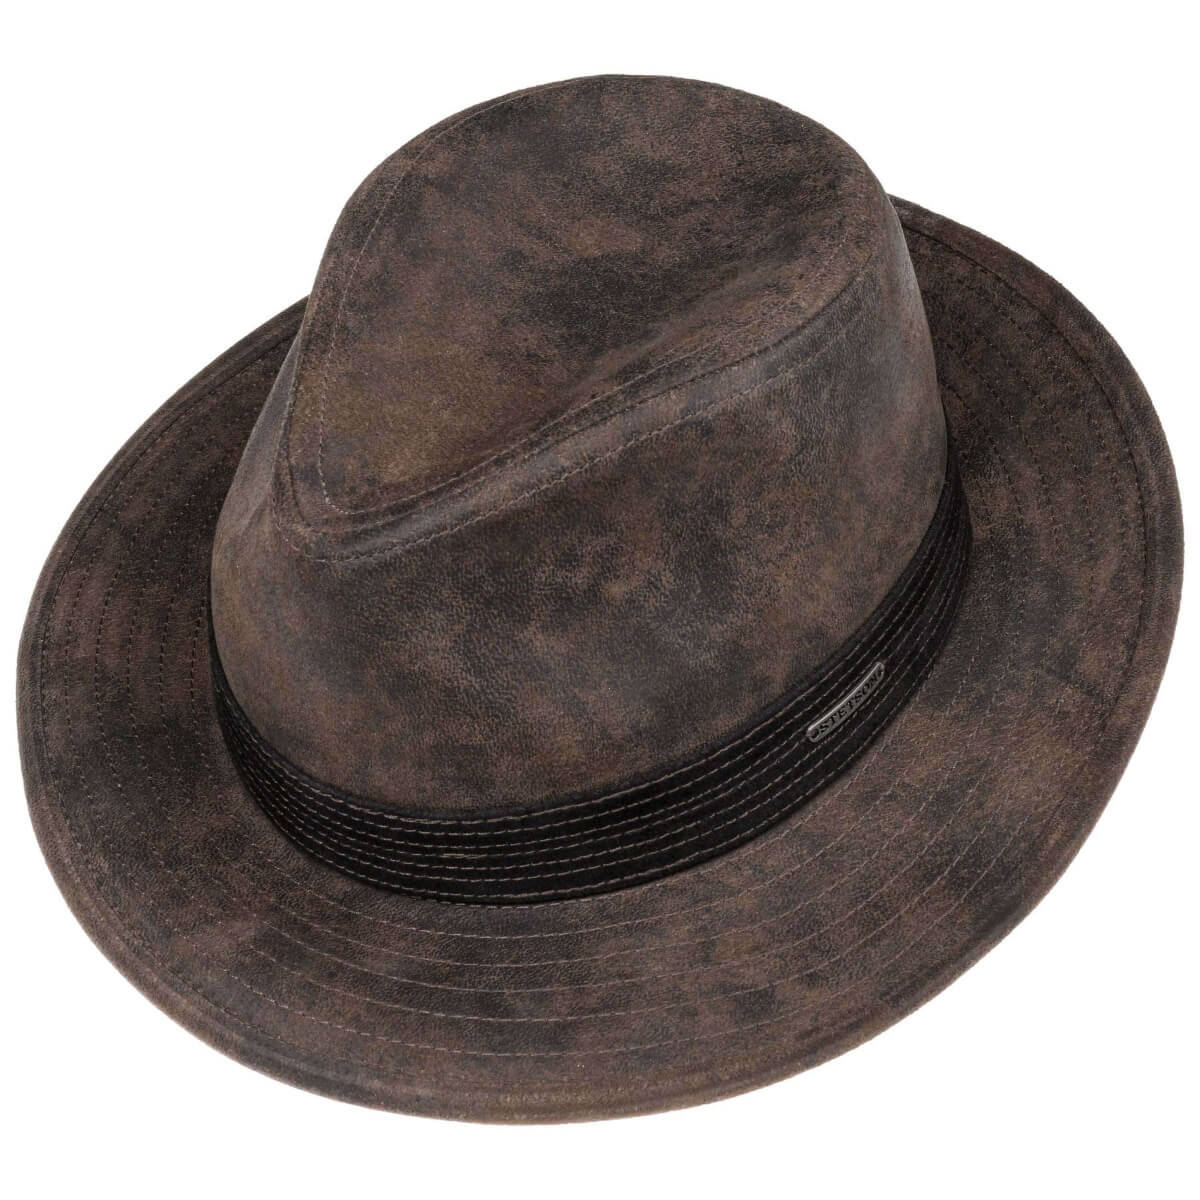 Stetson Jacky Pigskin Traveller Leather Hat Brown